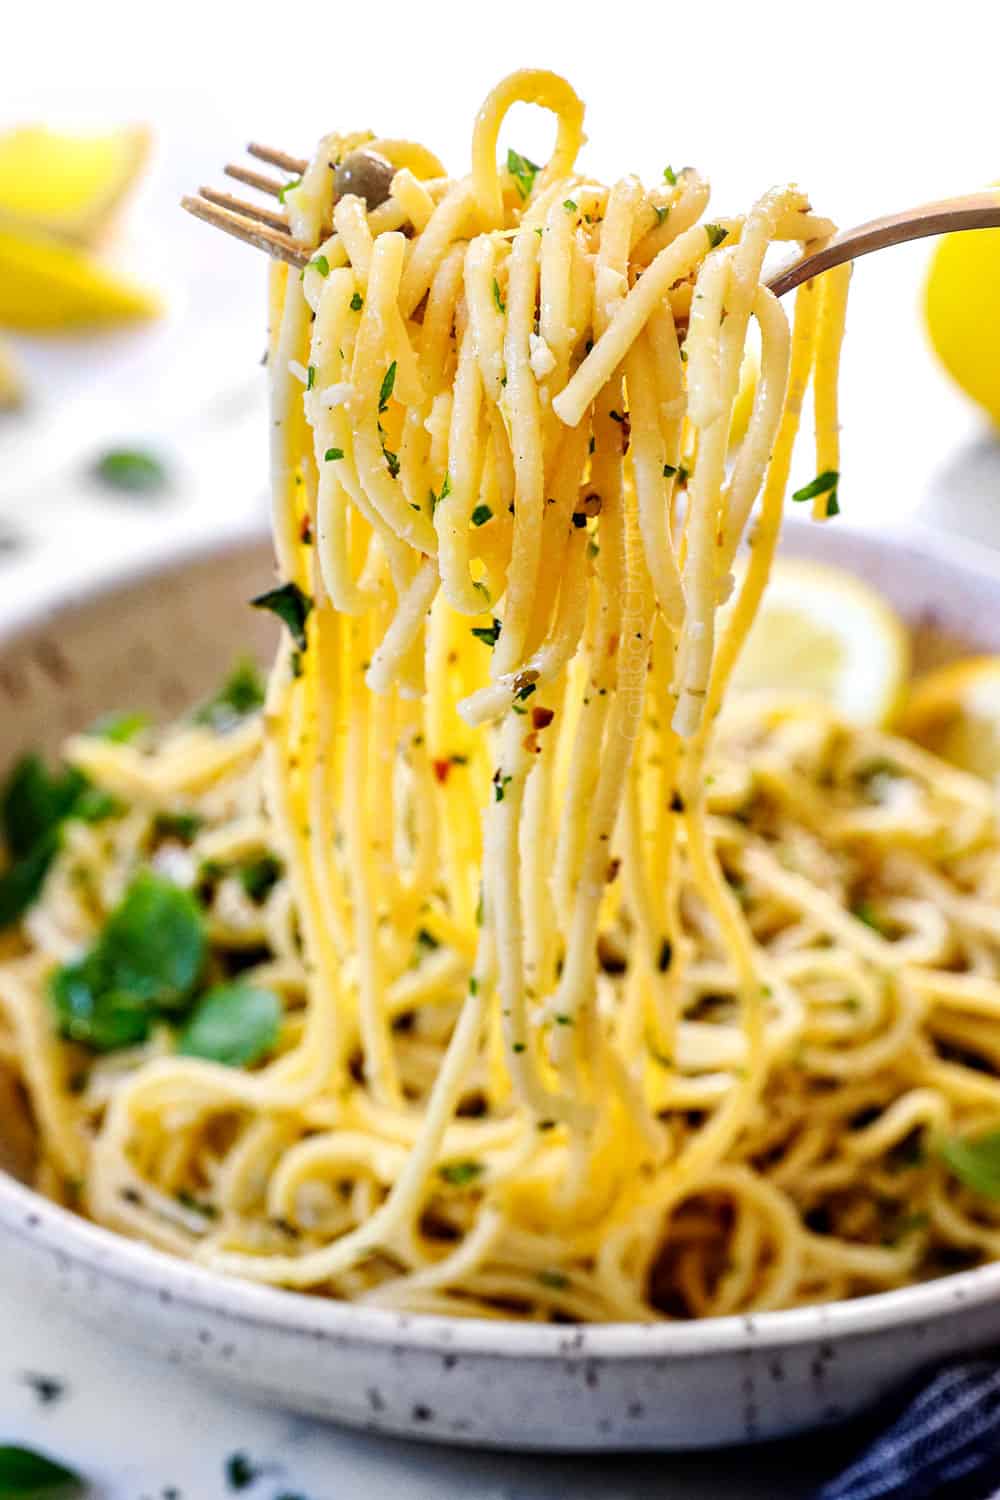 serving lemon pasta recipe (pasta al limone) by picking up lemon pasta with two forks